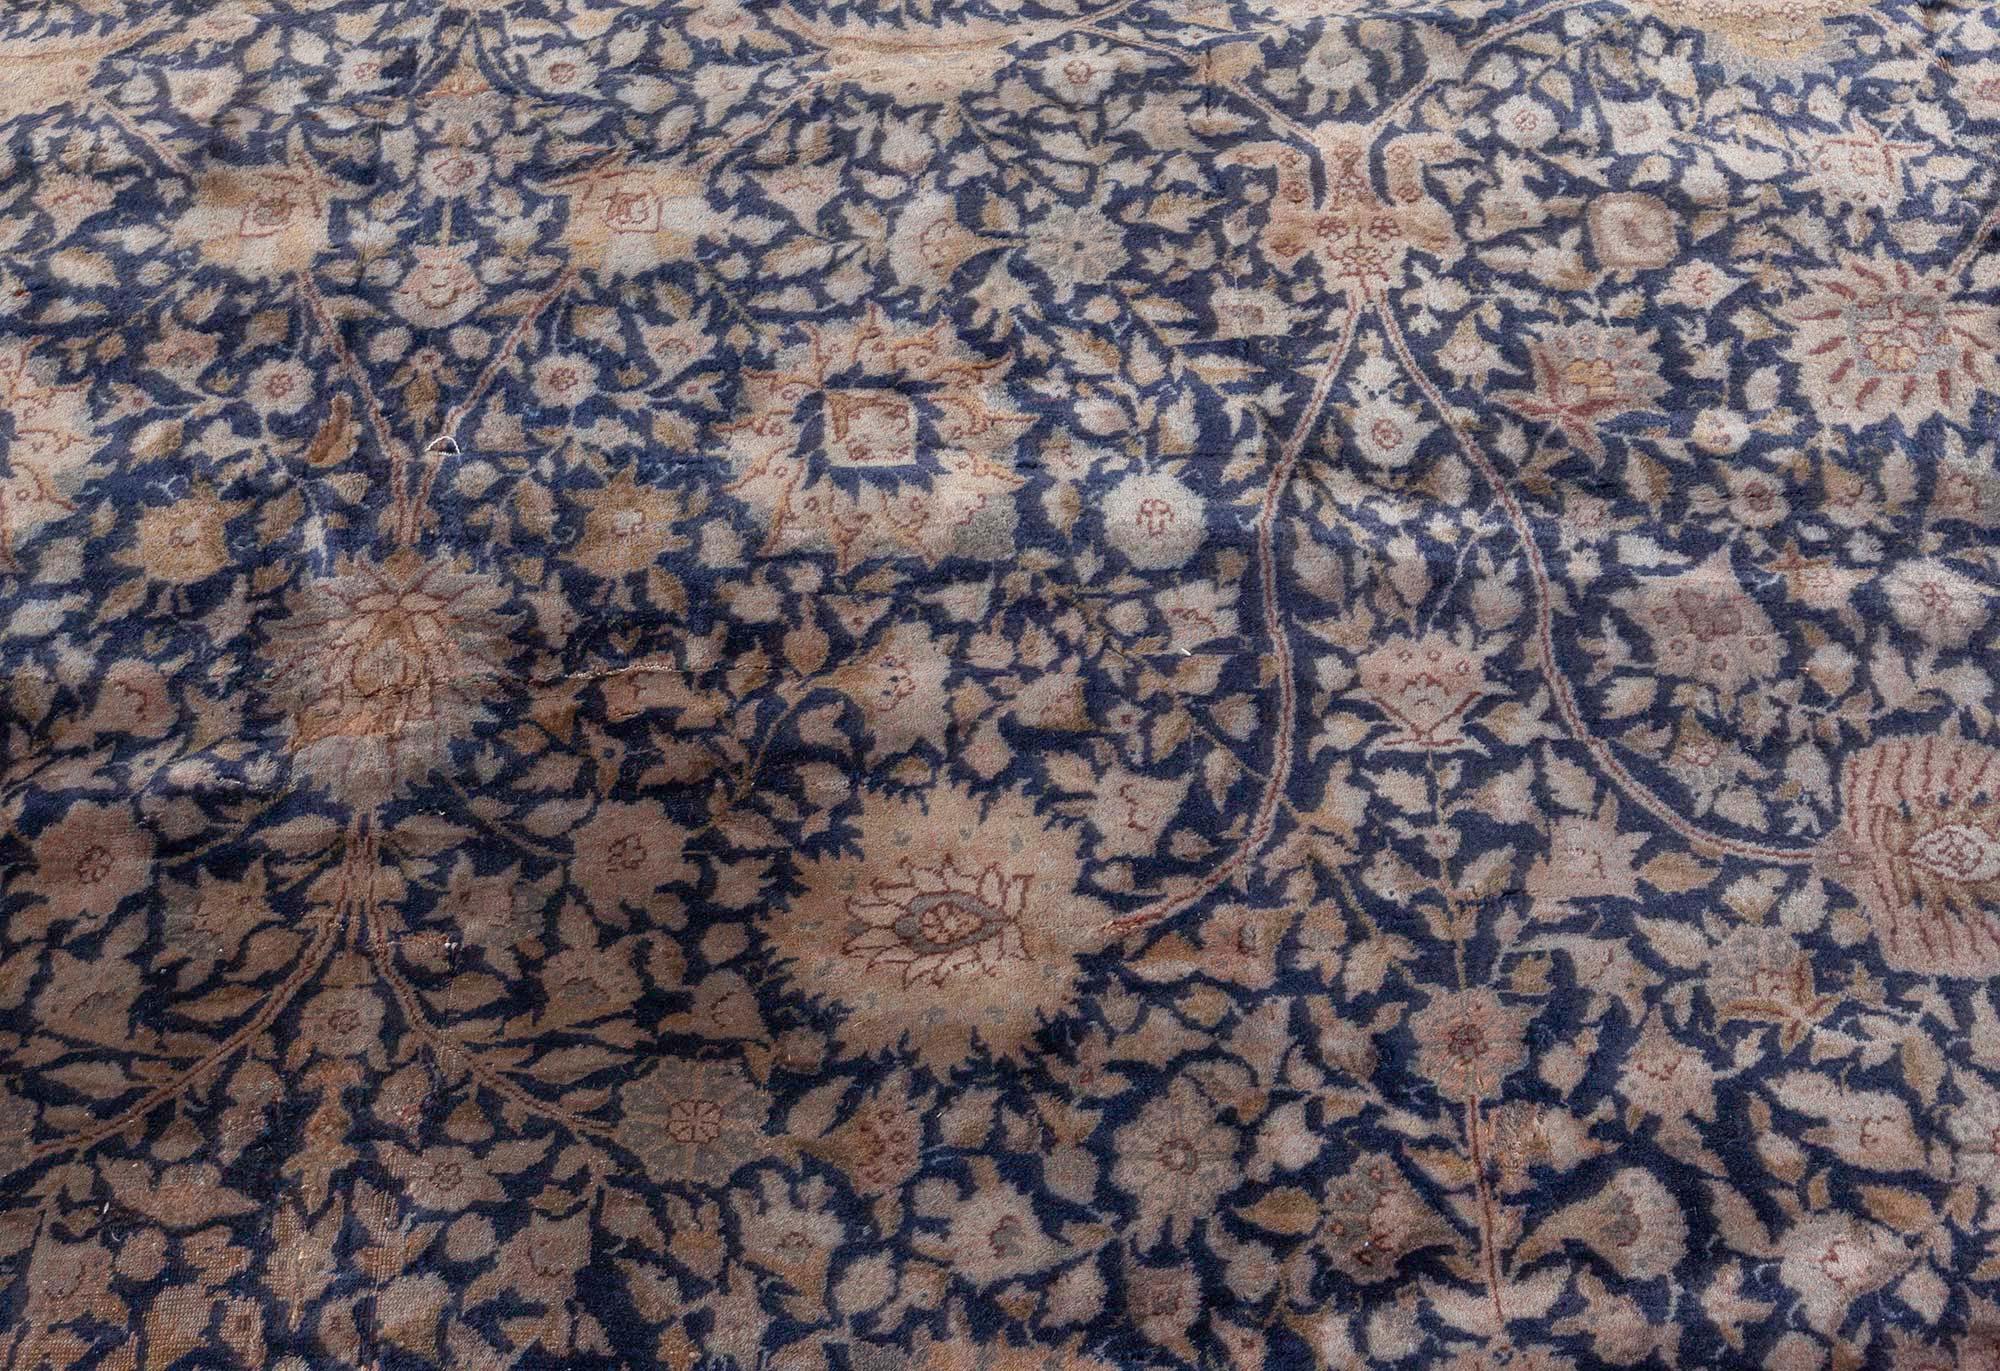 19th century Turkish Sivas Botanic handmade rug
Size: 19'0